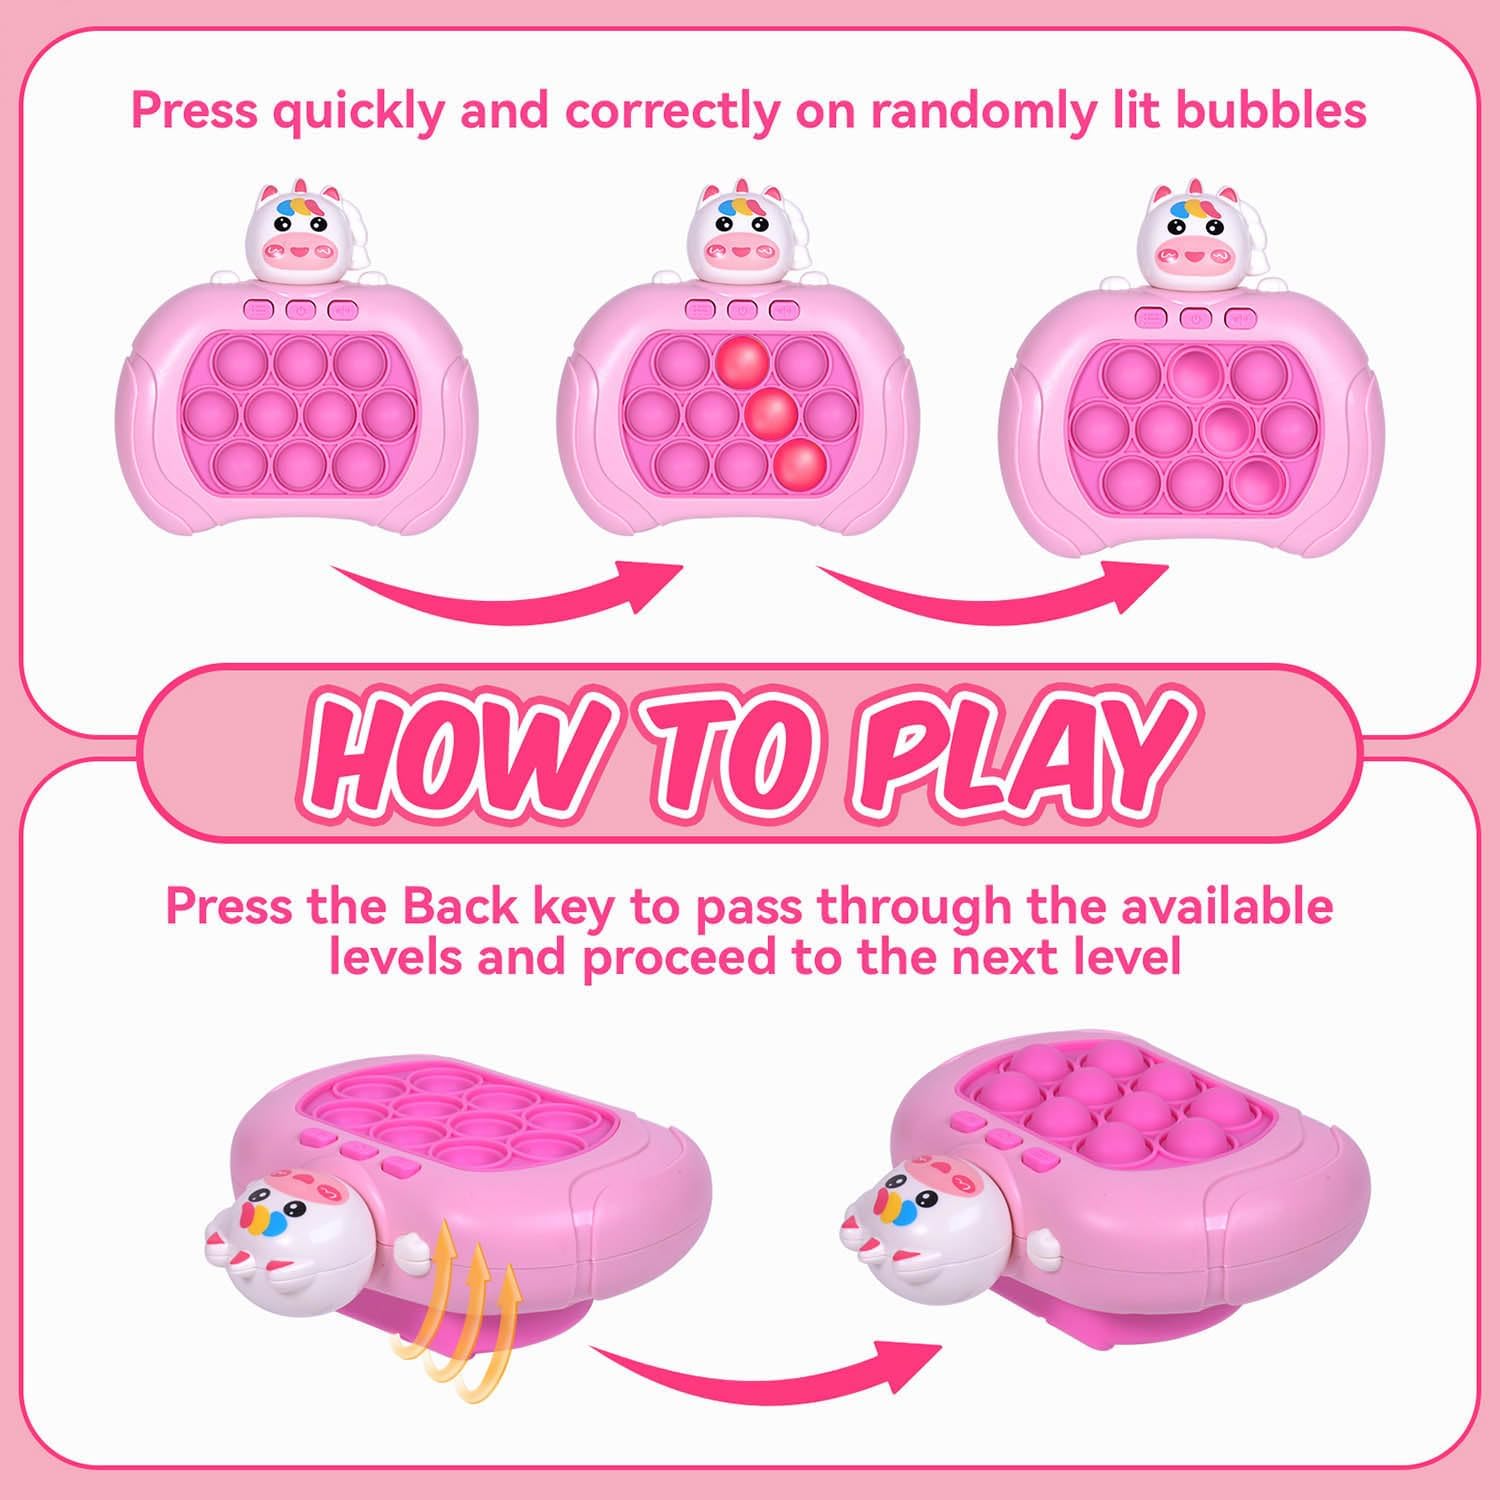 Quick Push Pop Game Fidget Toys Pro, Handheld Game Fast Puzzle